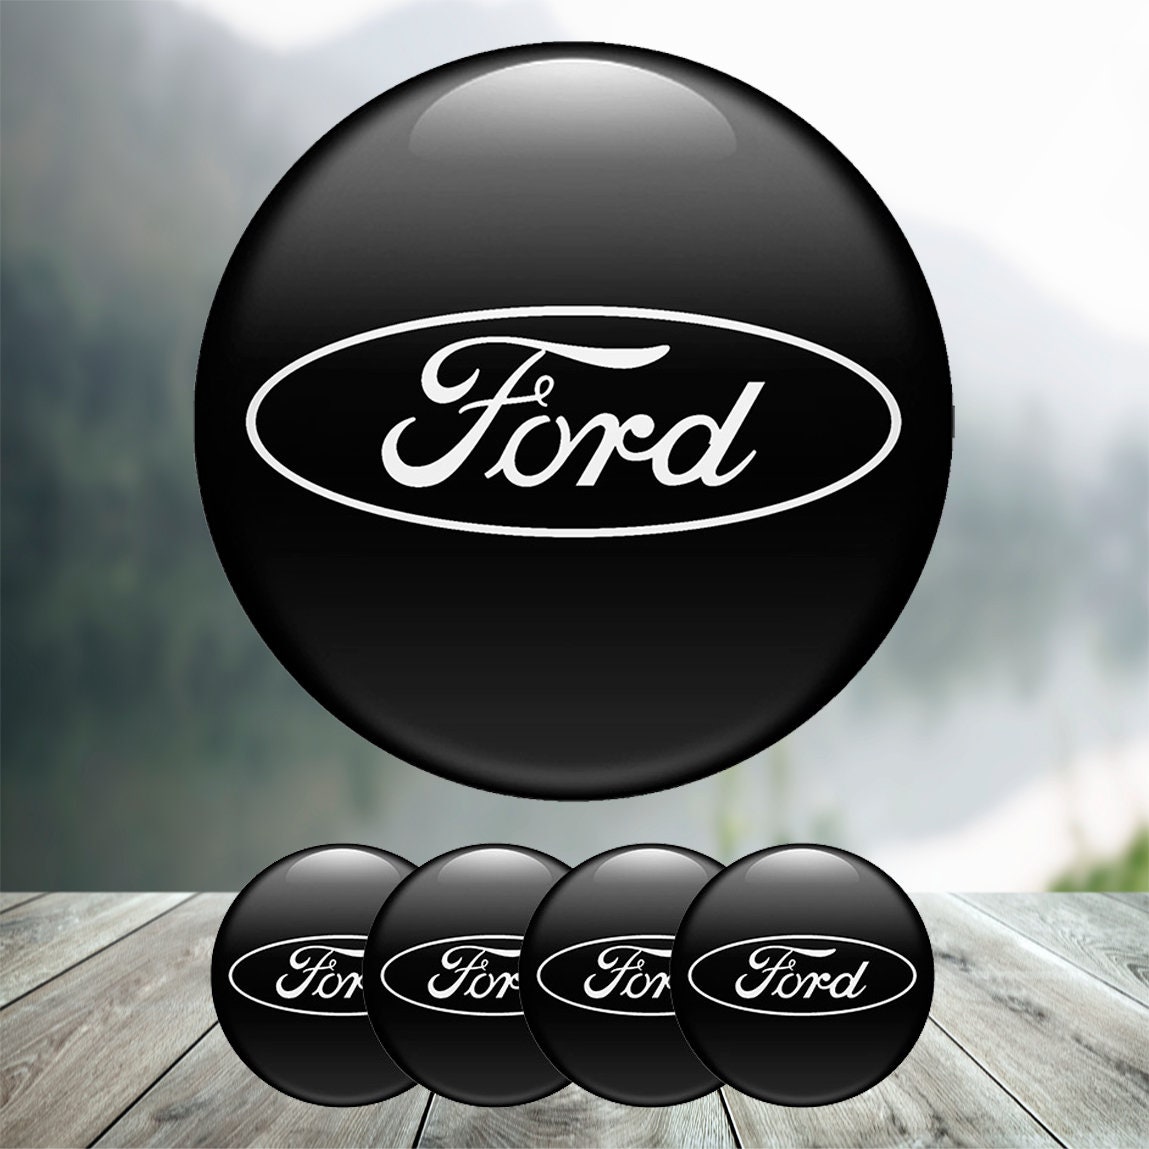 Ford Emblem 2x 125 x 50 mm folie Aufkleber Sticker Schwarz Rot